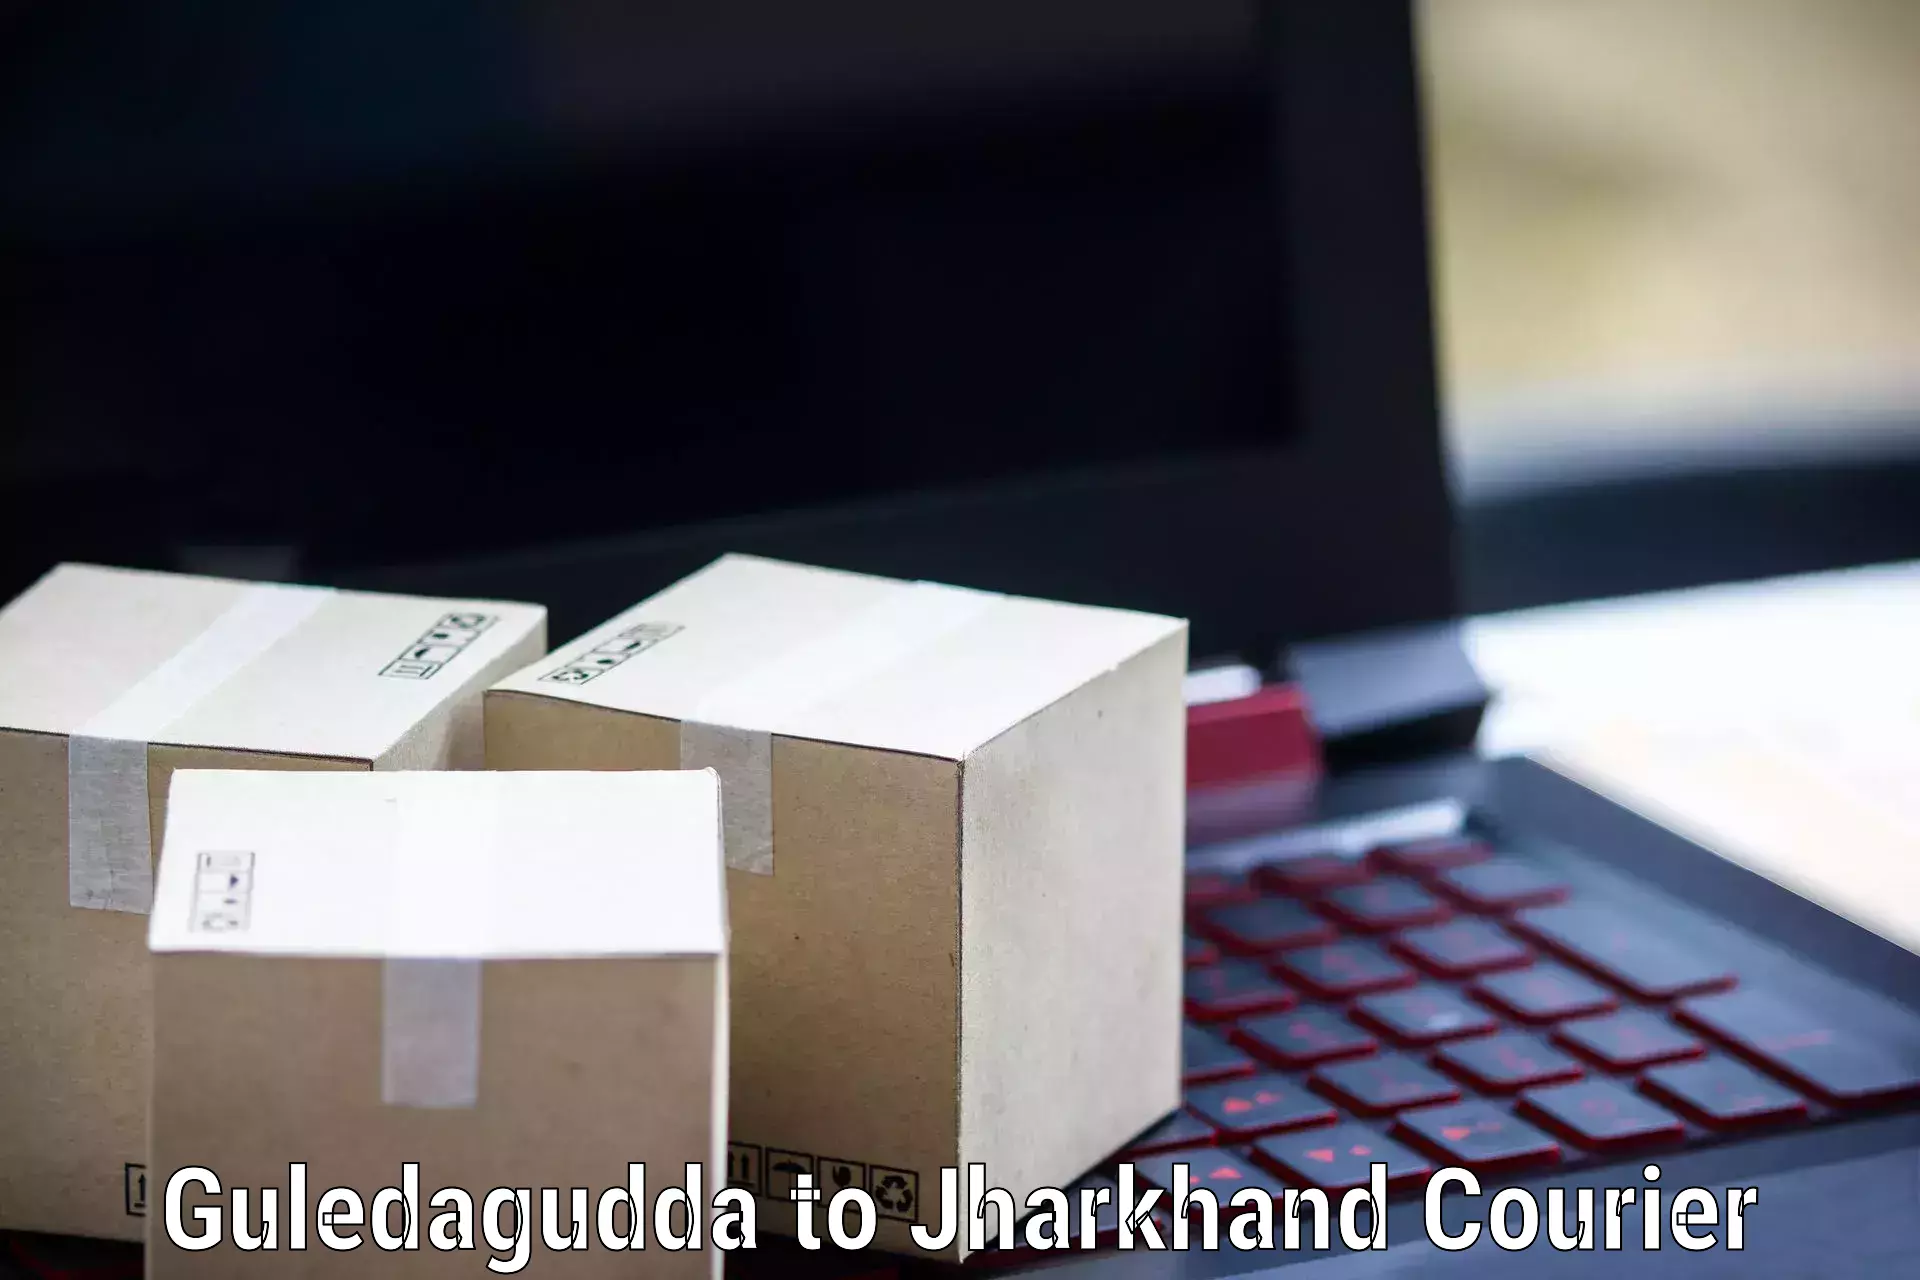 Package delivery network Guledagudda to Mahagama